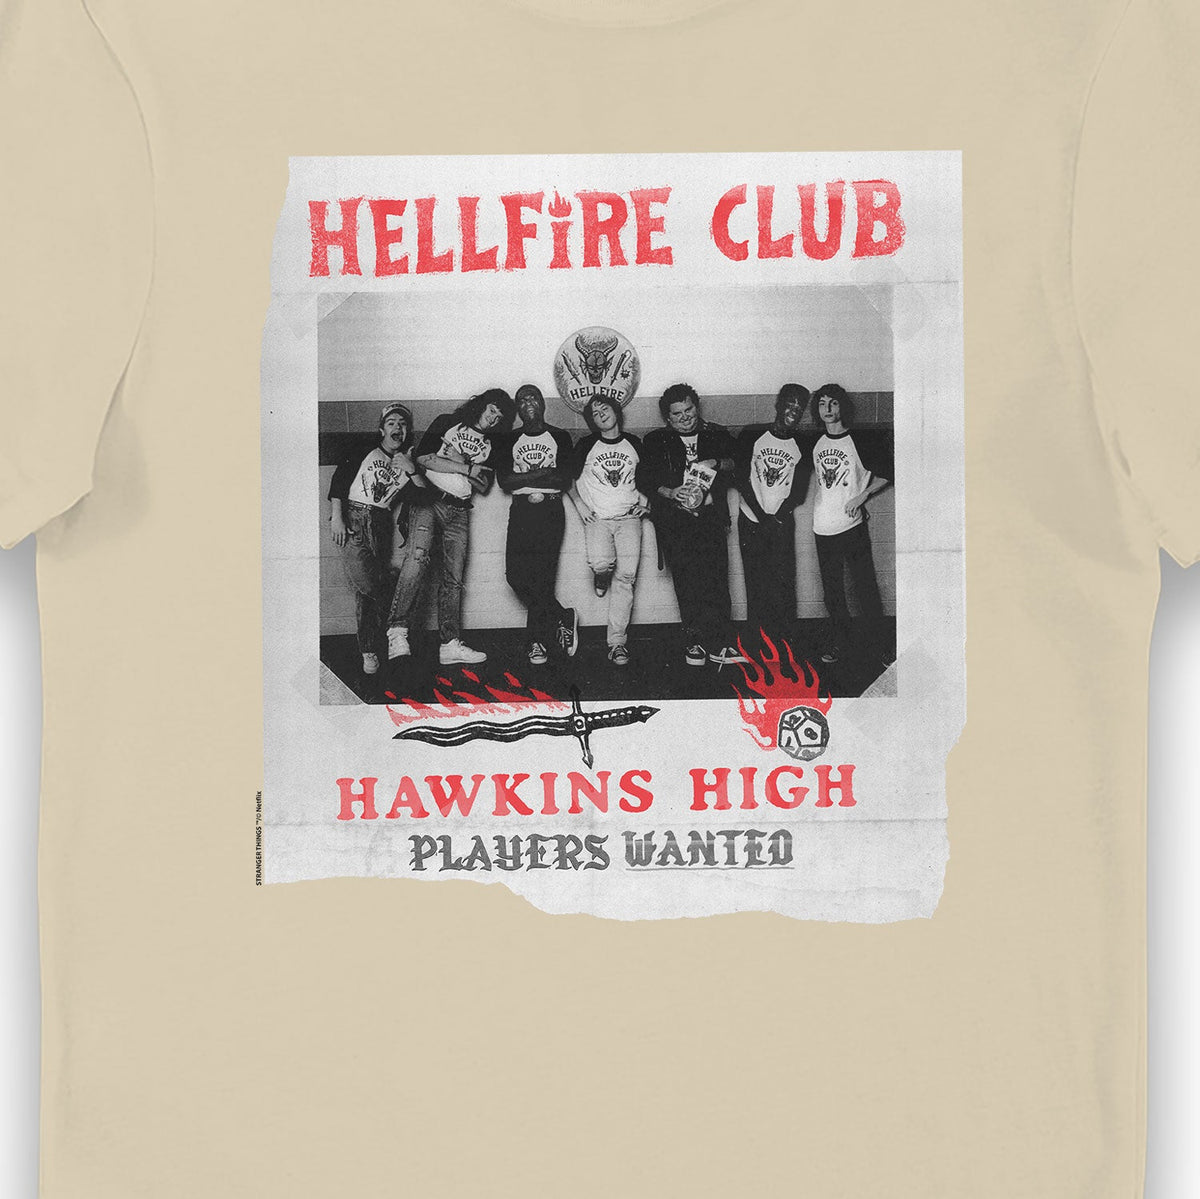 Stranger Things Hawkins High Hellfire Club Players Wanted Adults T-Shirt Oatmilk